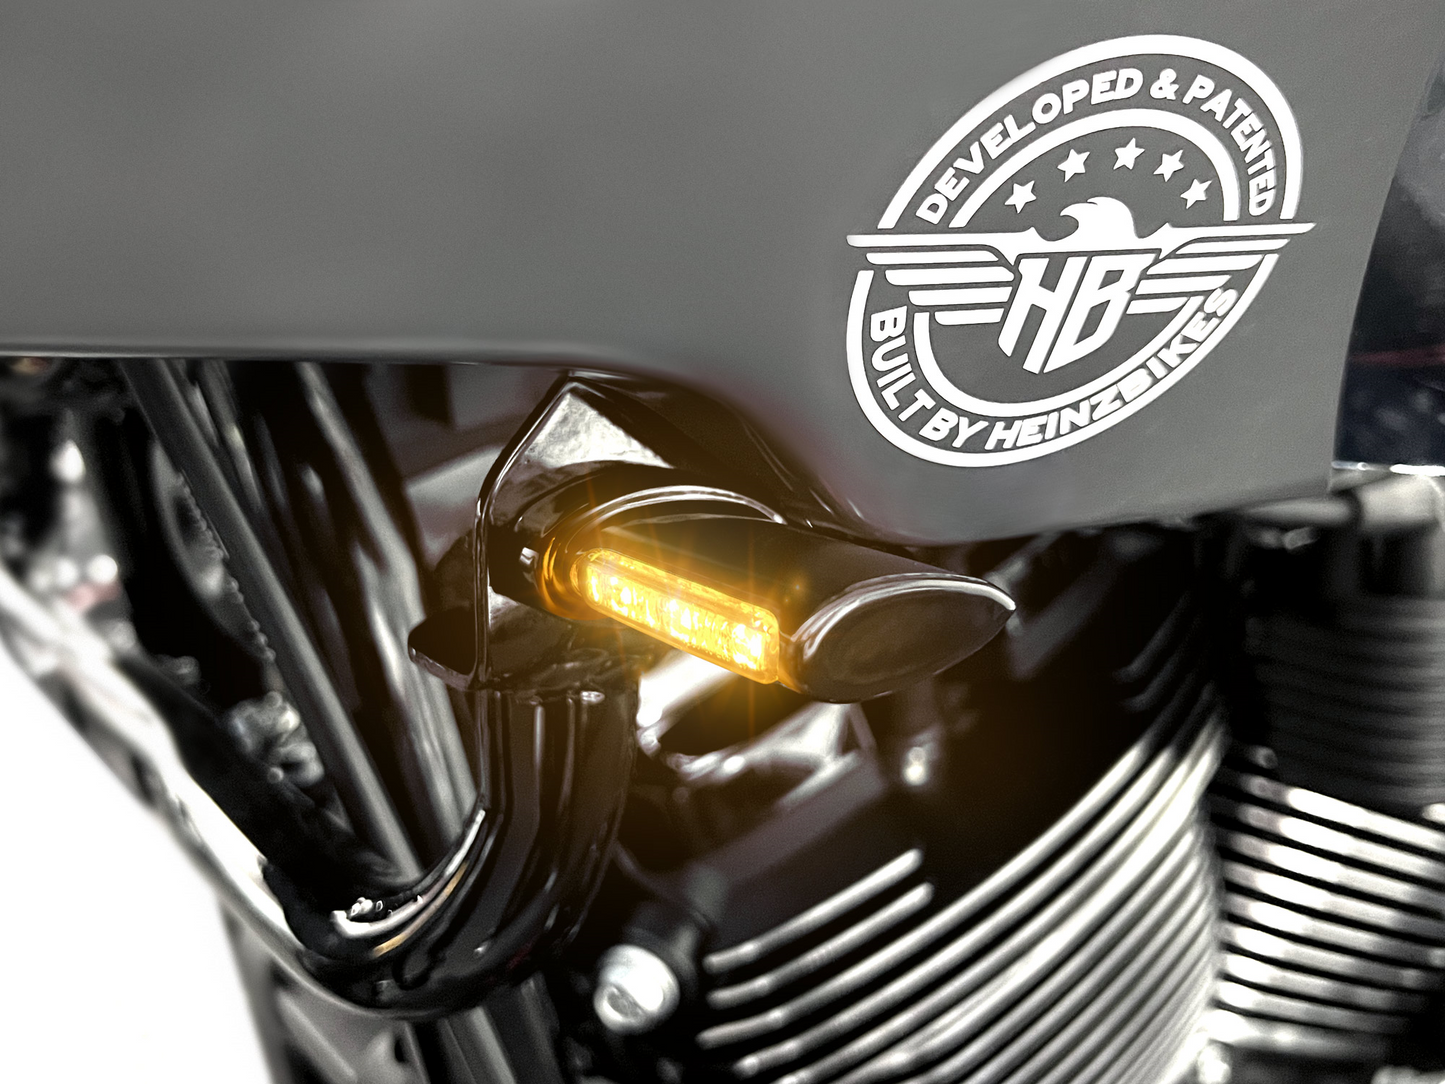 ST Intermitentes Classic Con Ancho Maximo Indicador 56Mm Para Harley Davidson